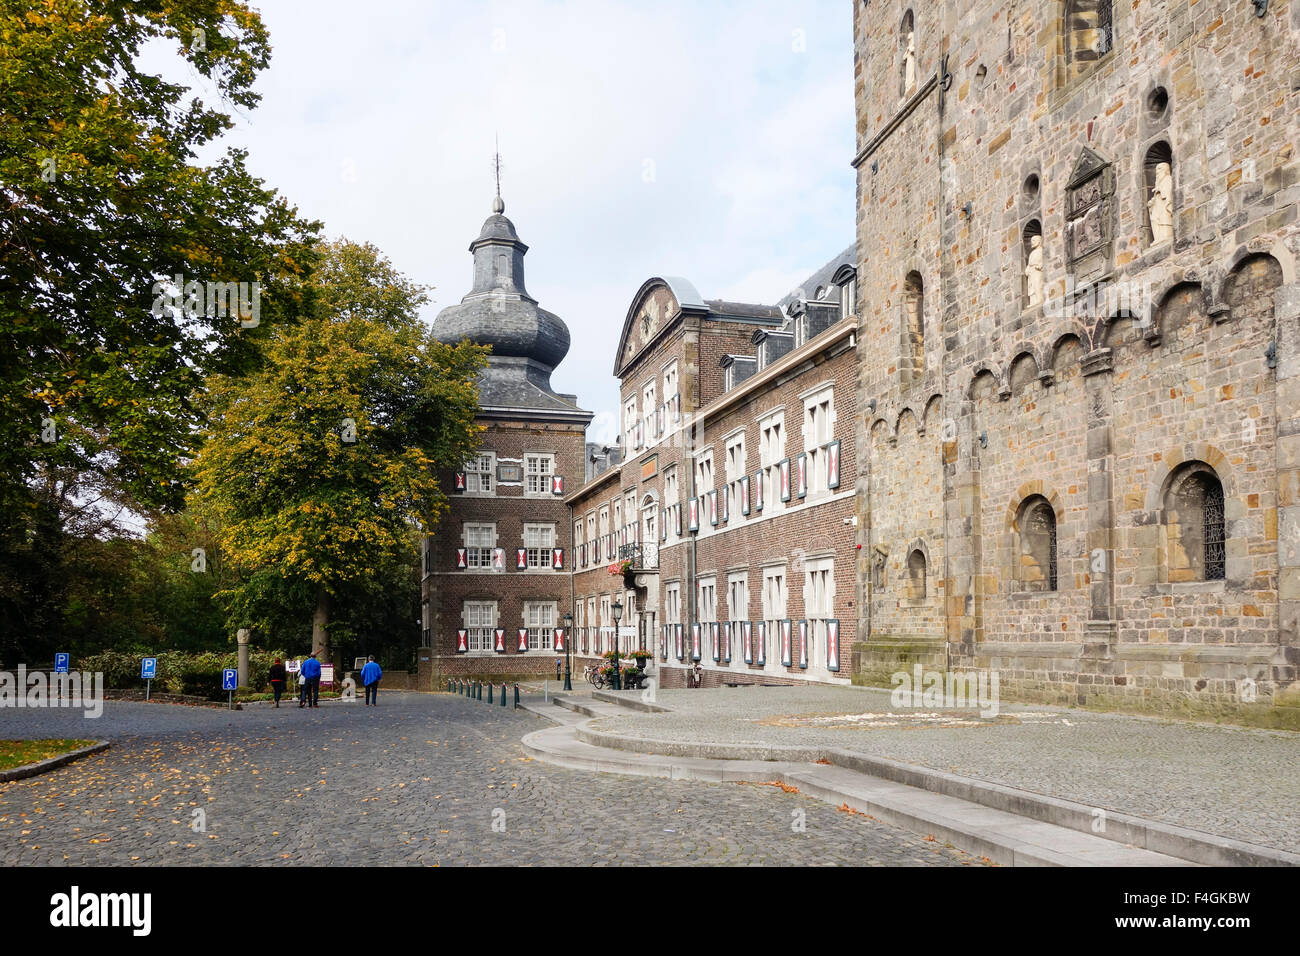 Rolduc medieval abbey, Kerkrade, Limburg, Netherlands. Stock Photo